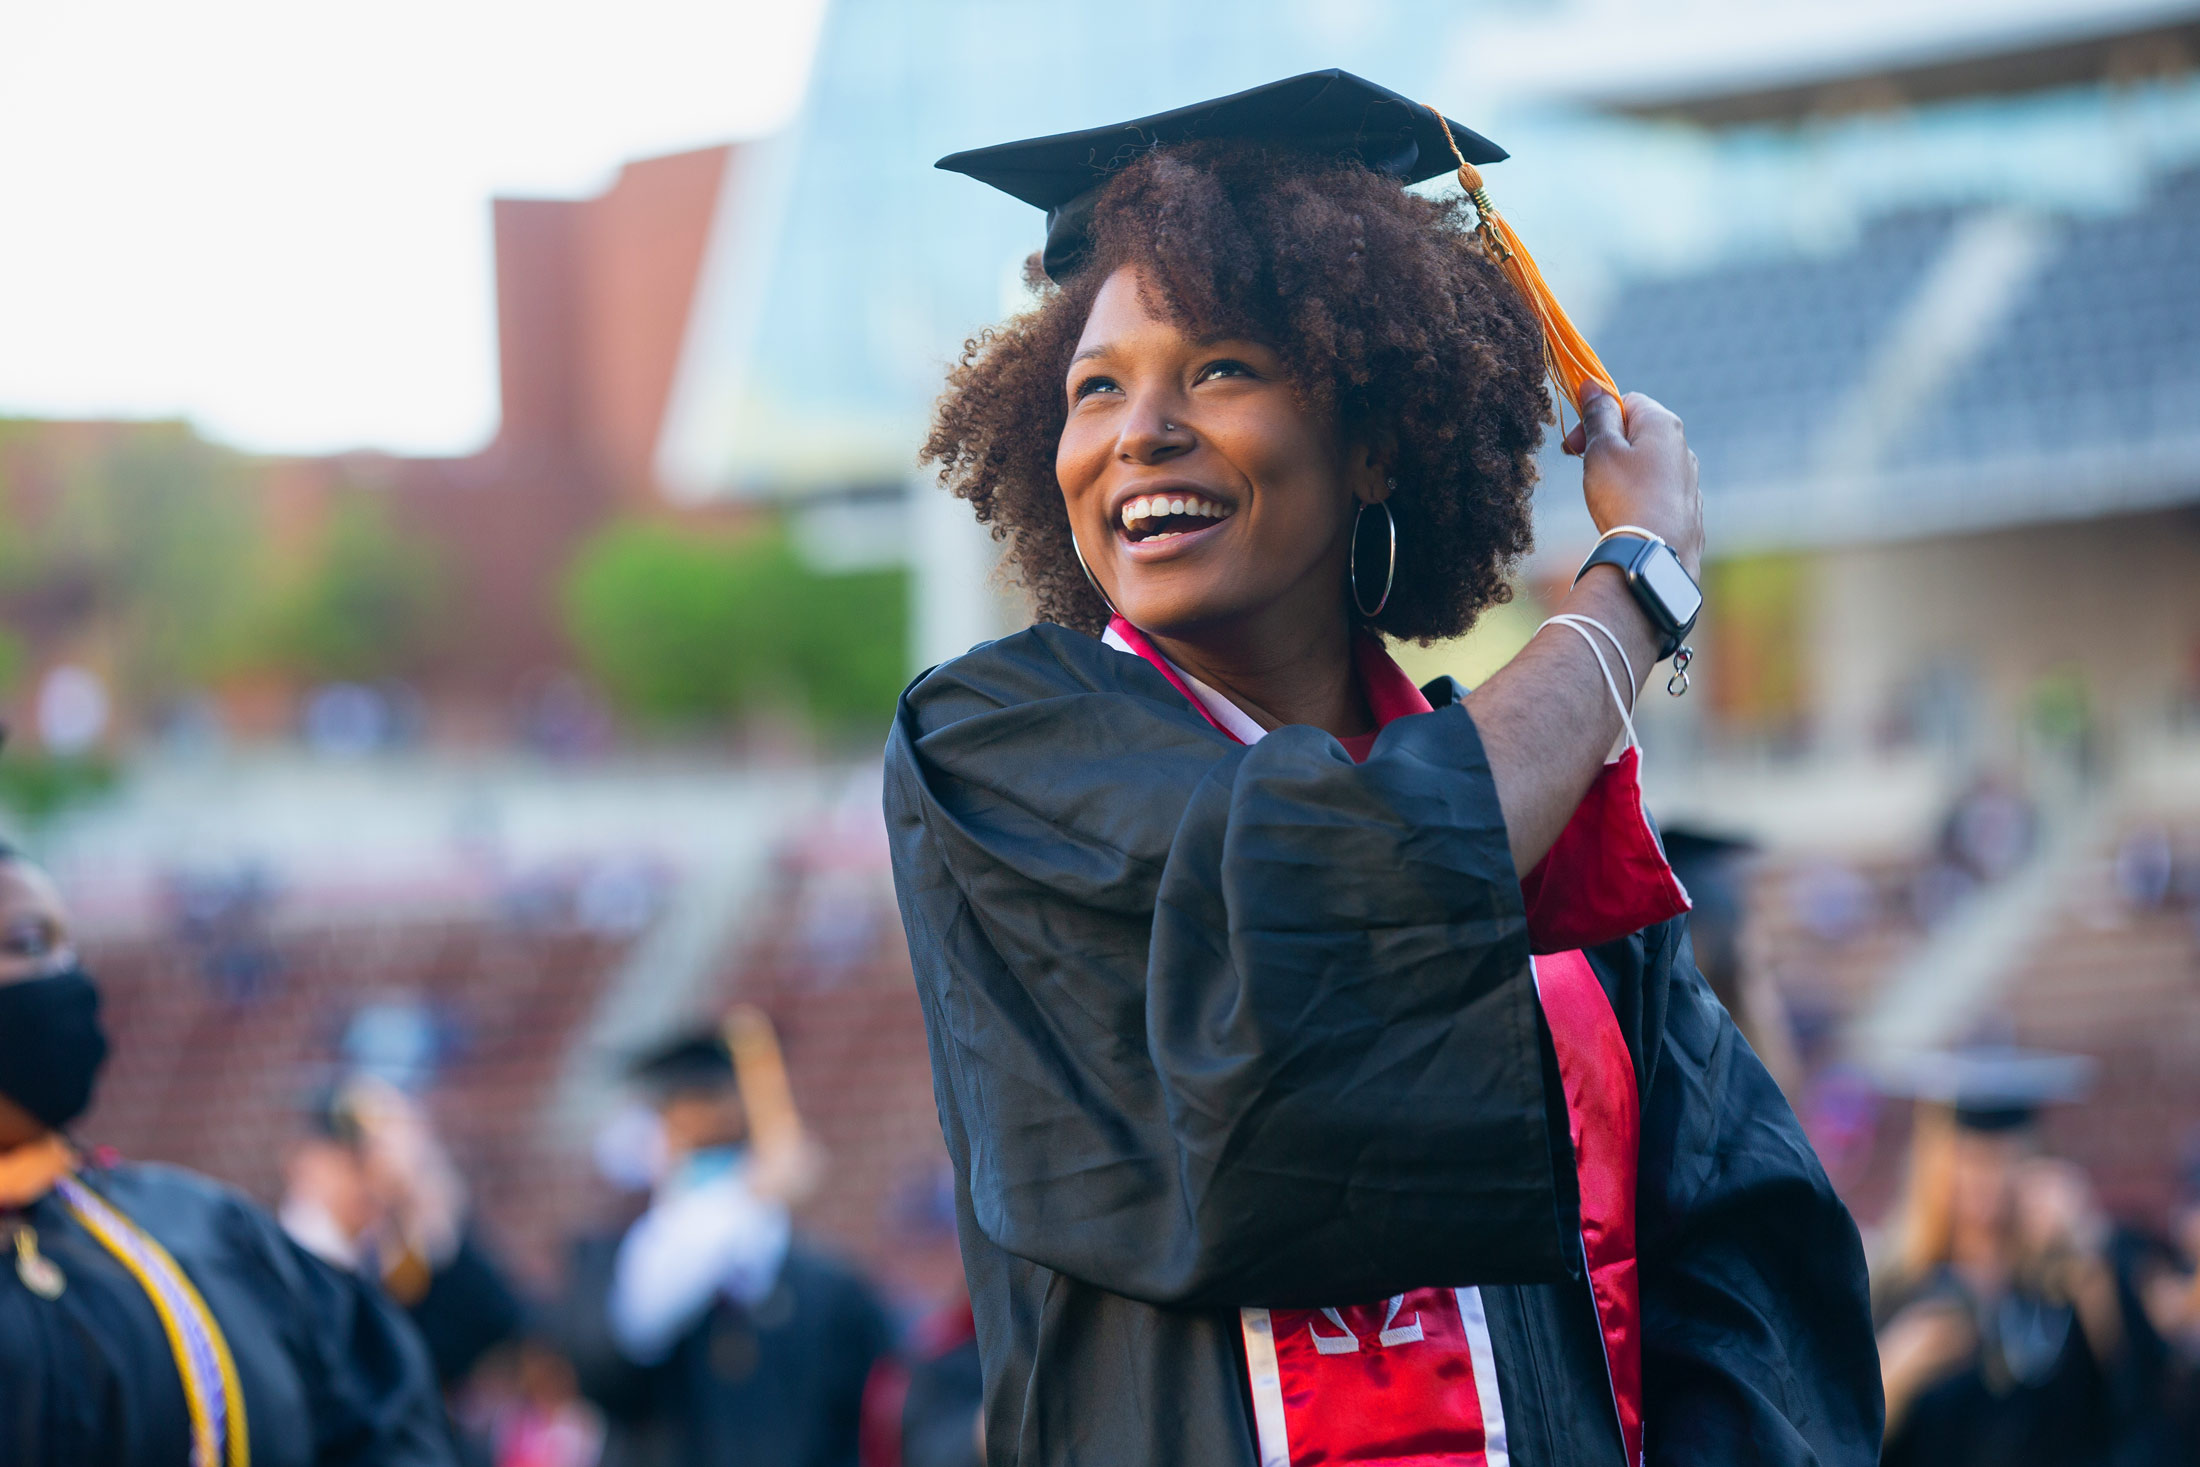 A University of Cincinnati grad smiles as she adjusts her tassel